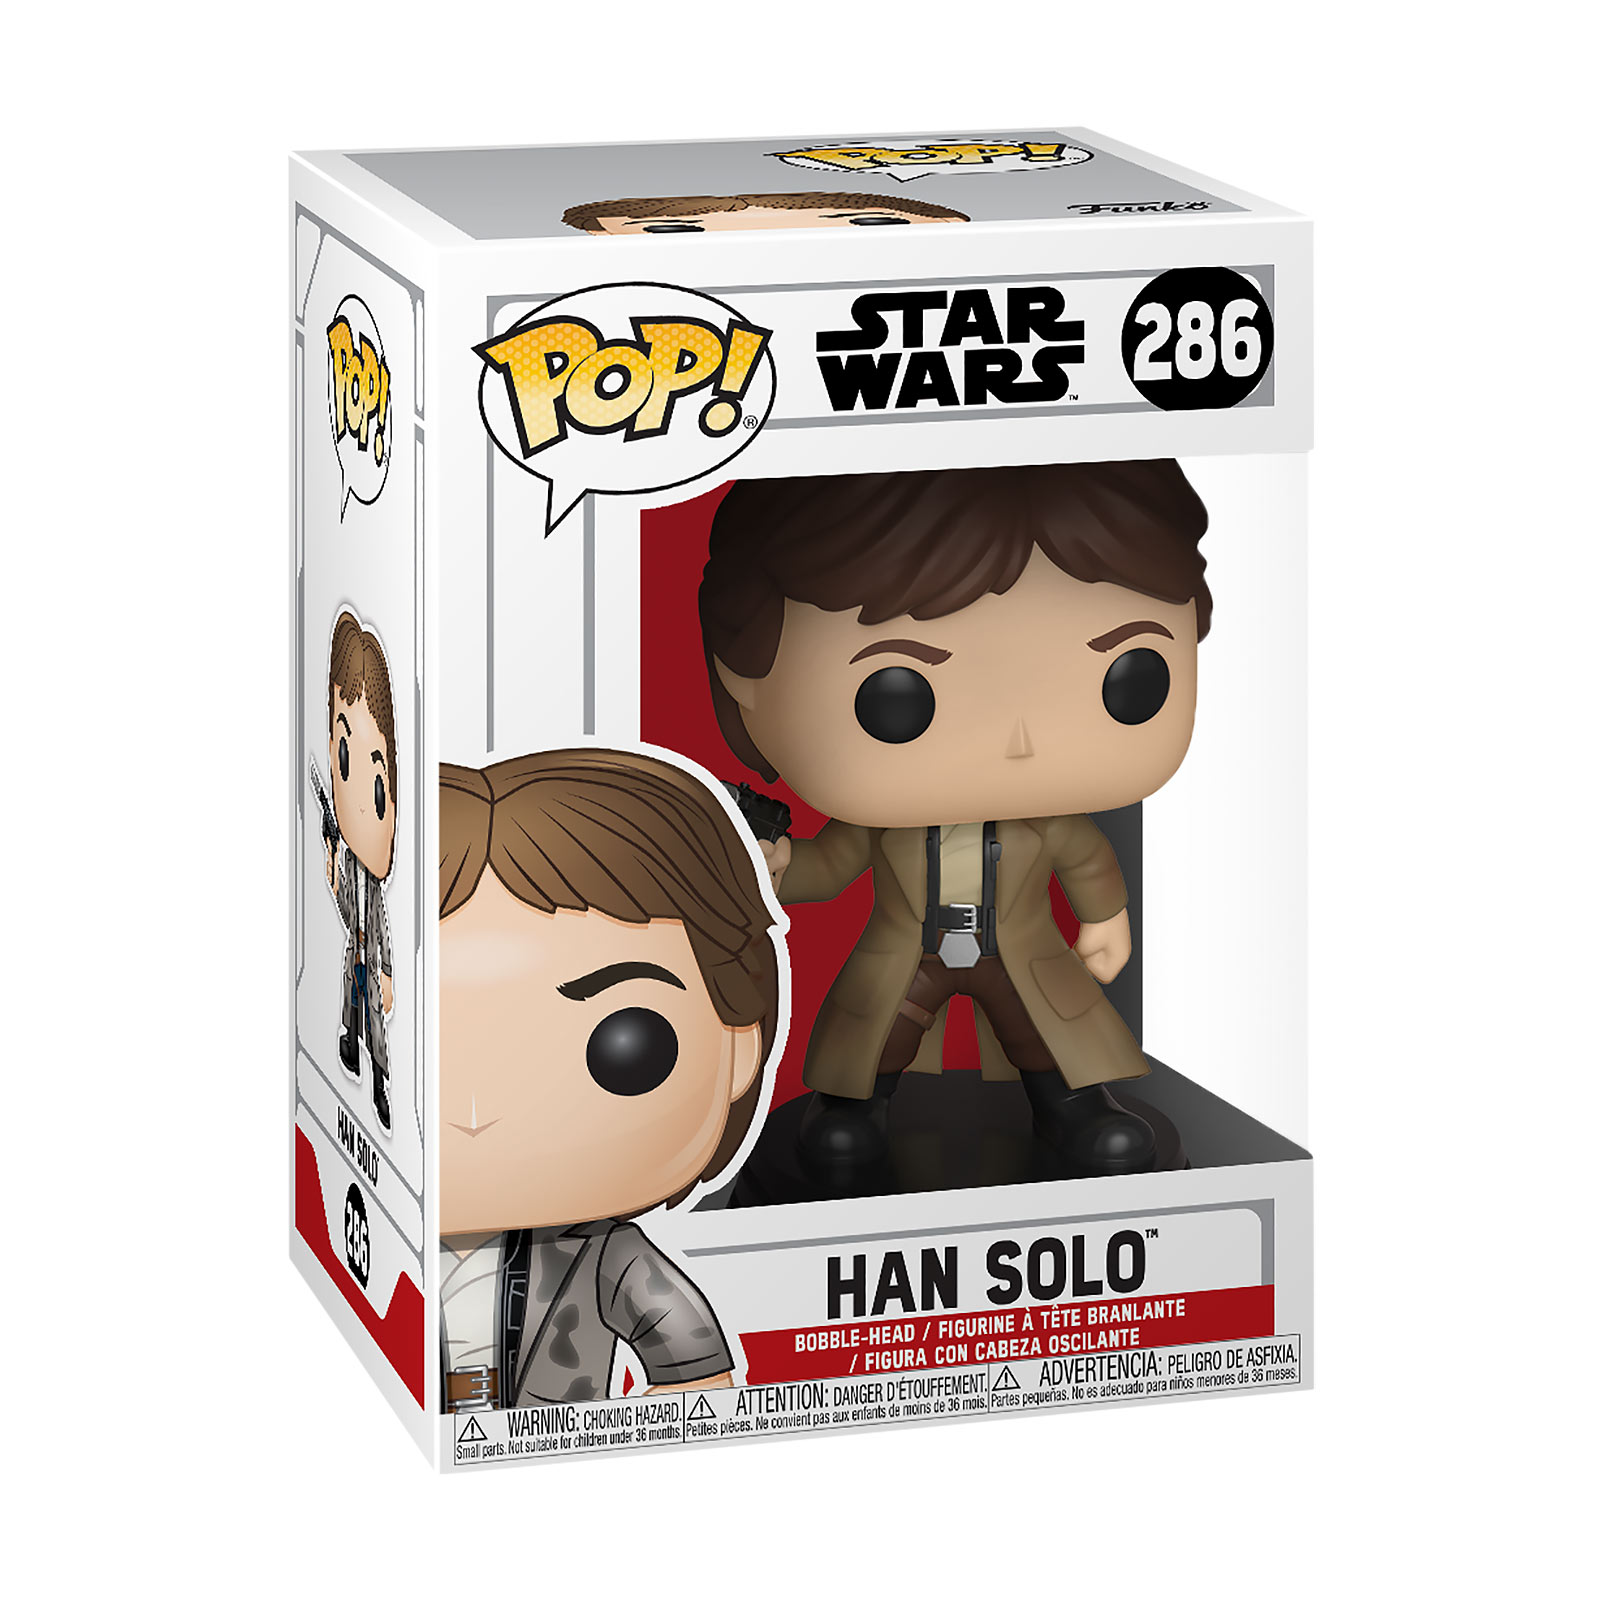 Star Wars - Han Solo Endor Funko Pop bobblehead figure